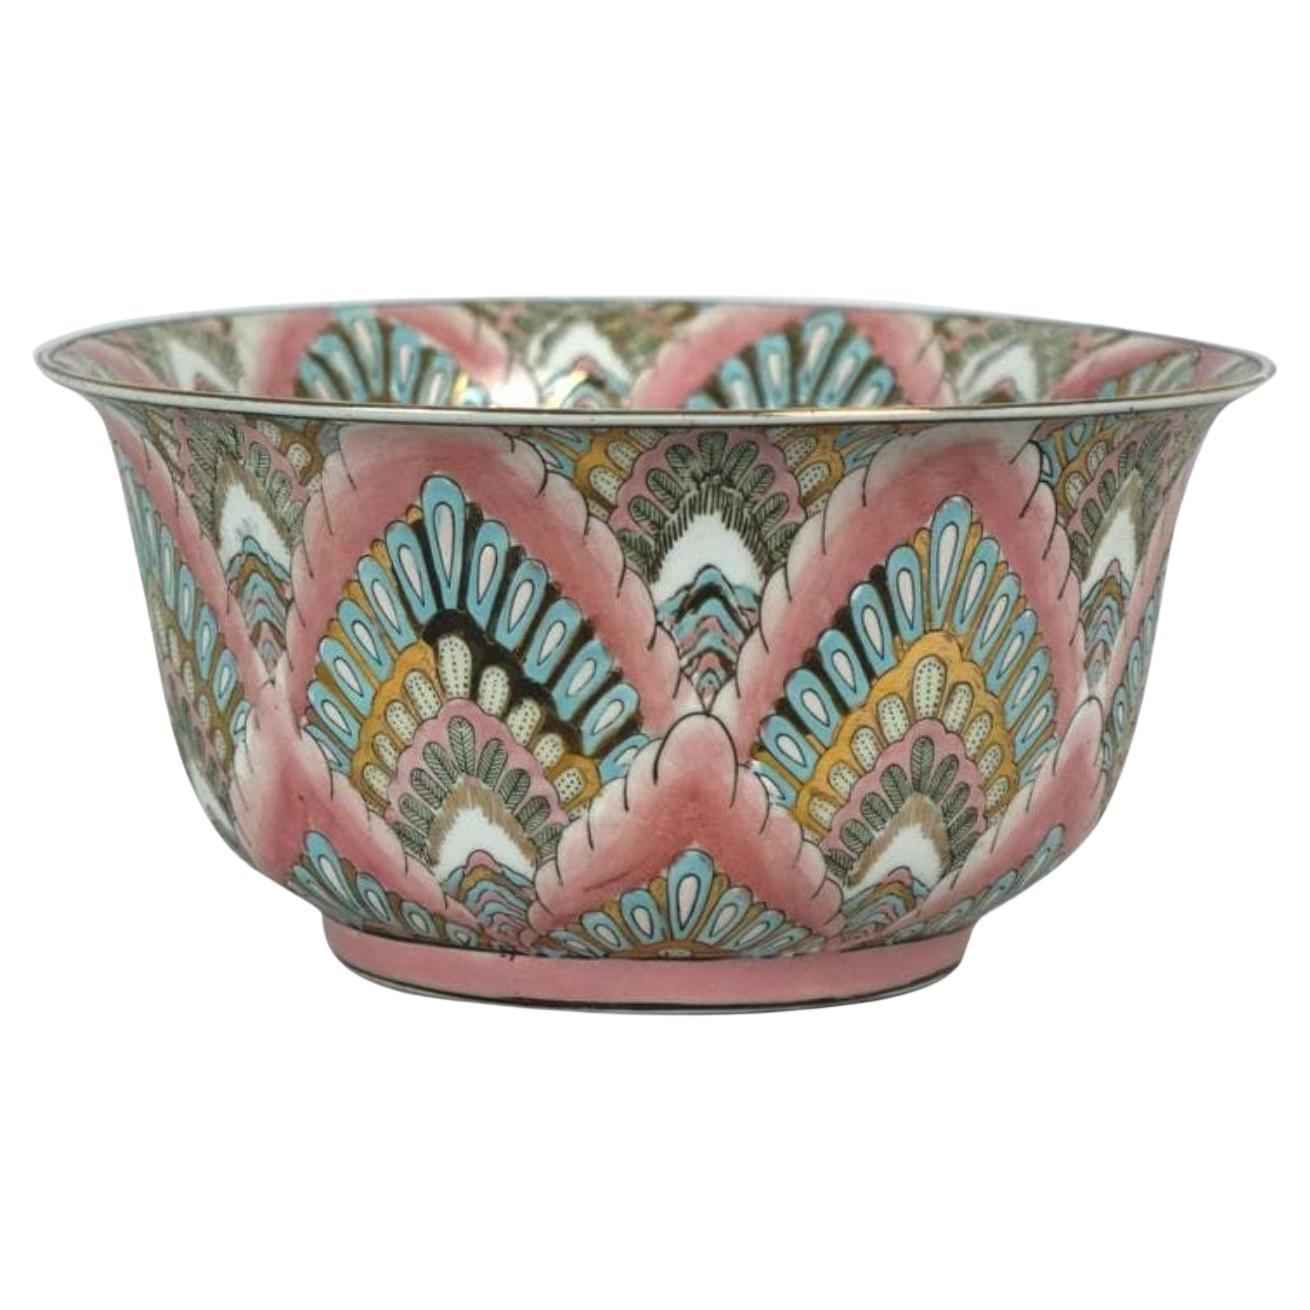 Rare Antique Chinese Export Porcelain Bowl